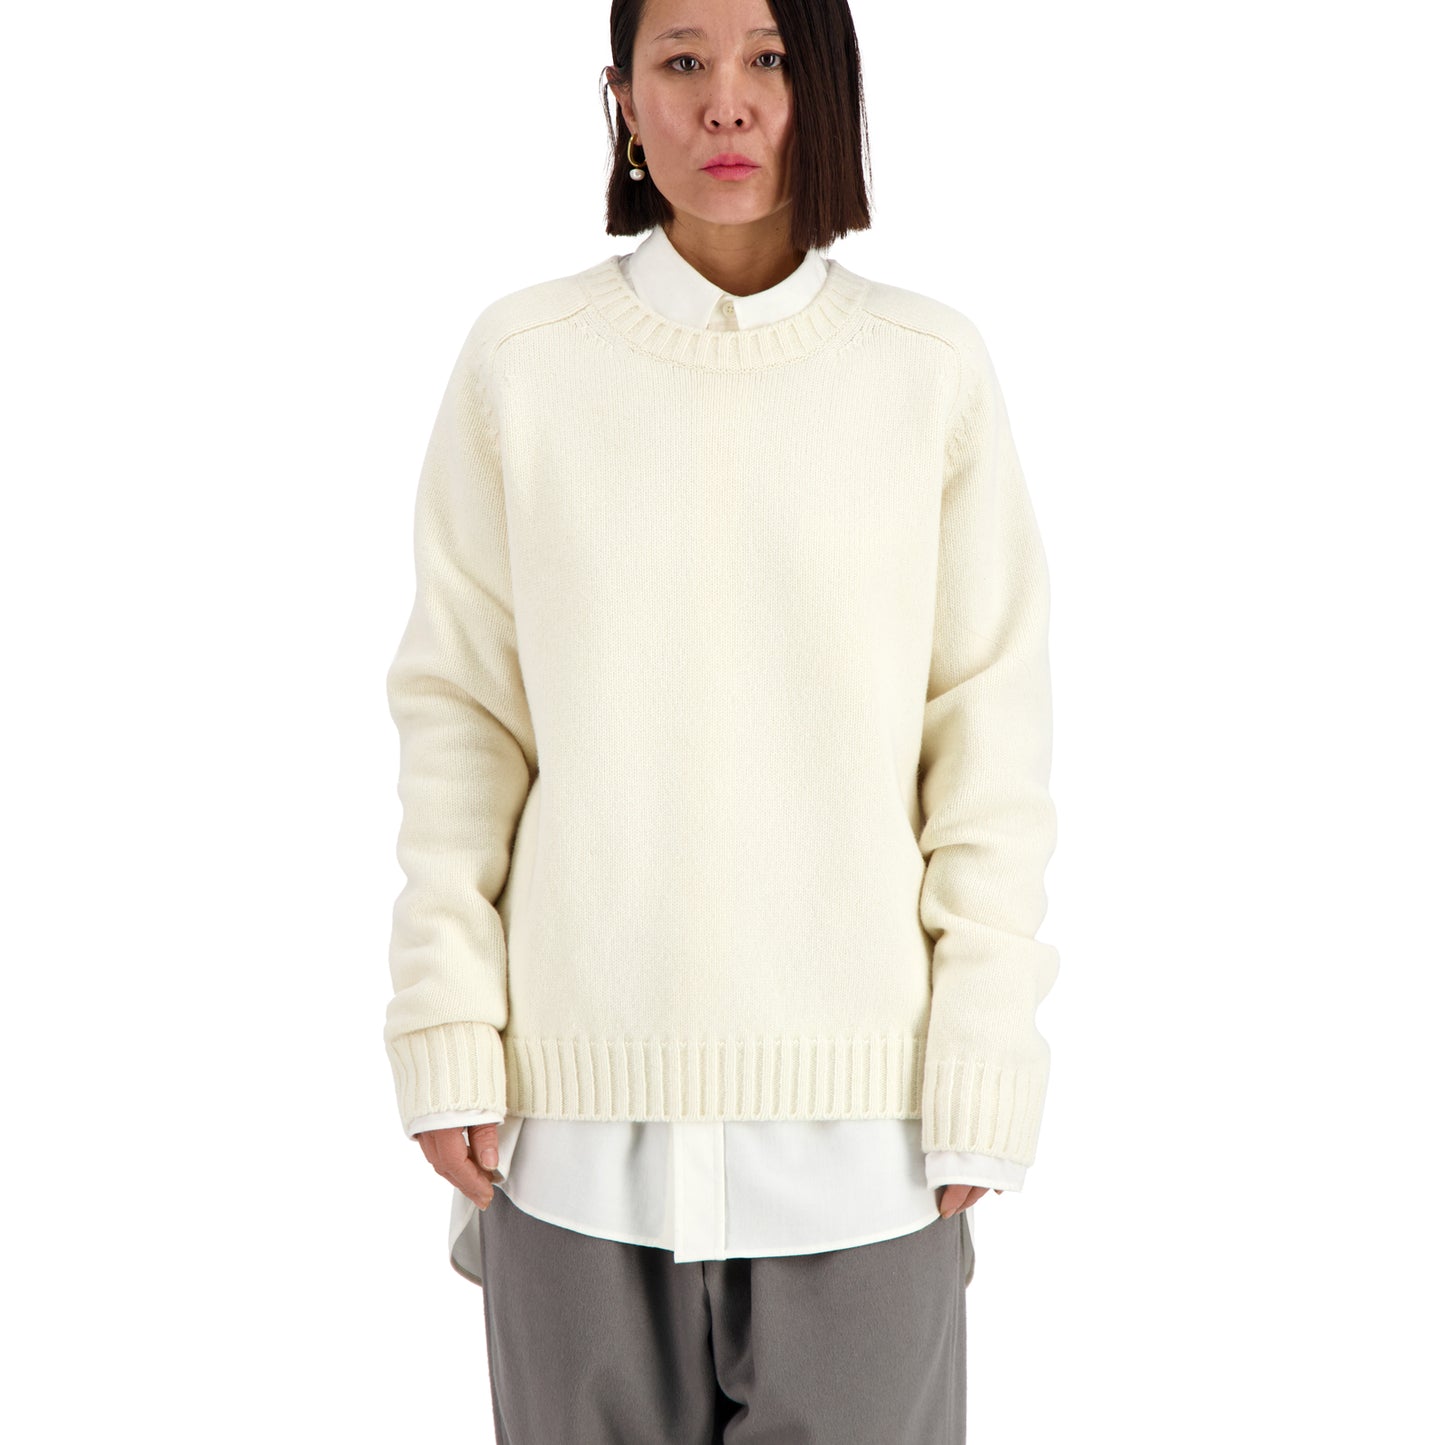 Jack Crew Neck Shetland Wool Sweater Natural White